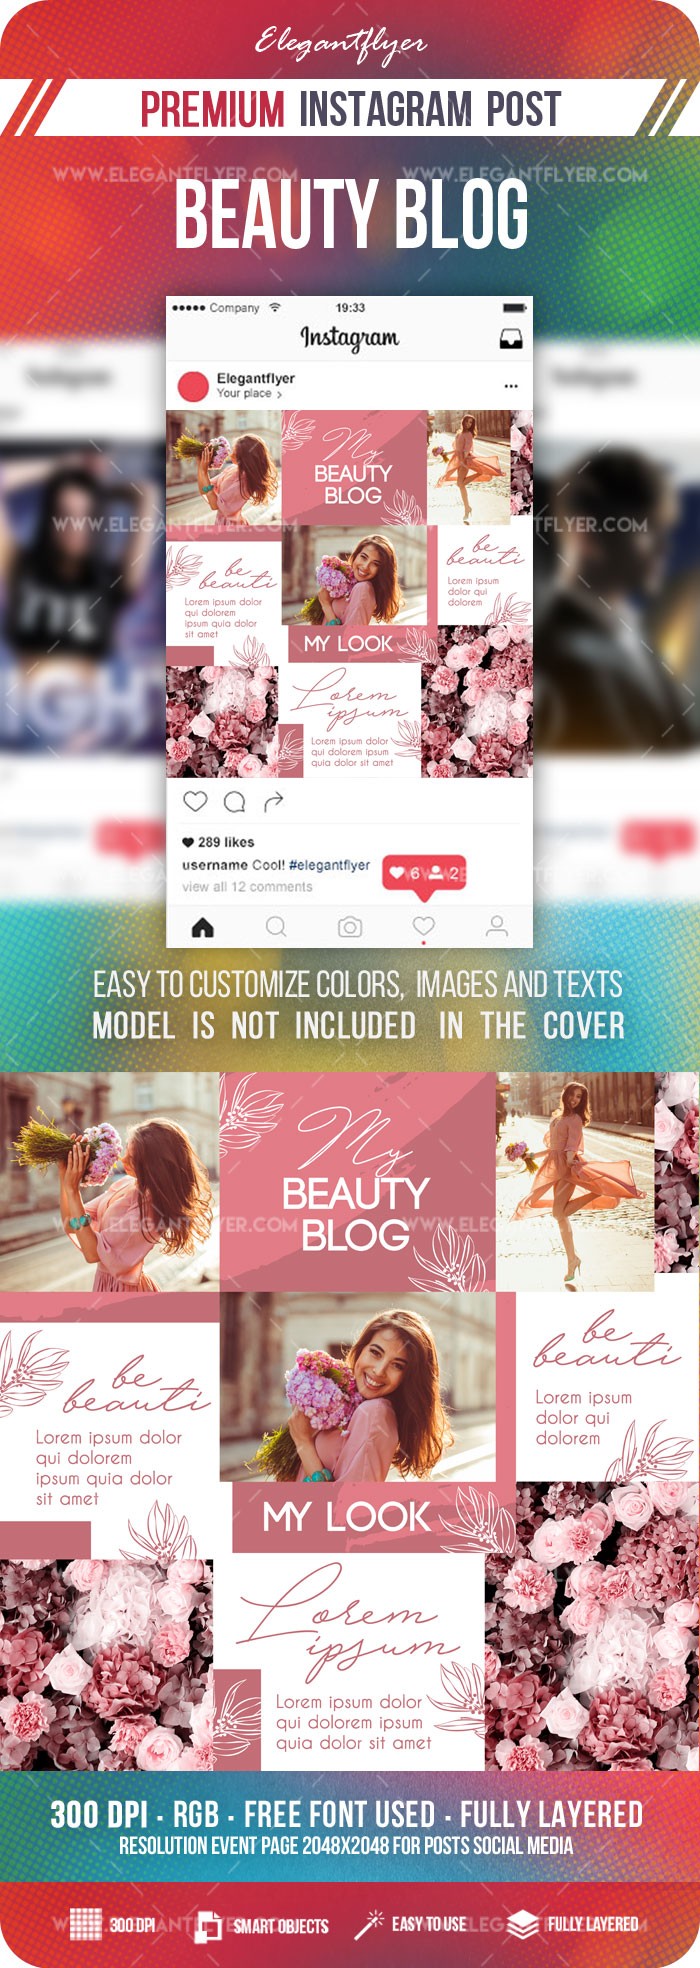 Blog de beauté Instagram by ElegantFlyer